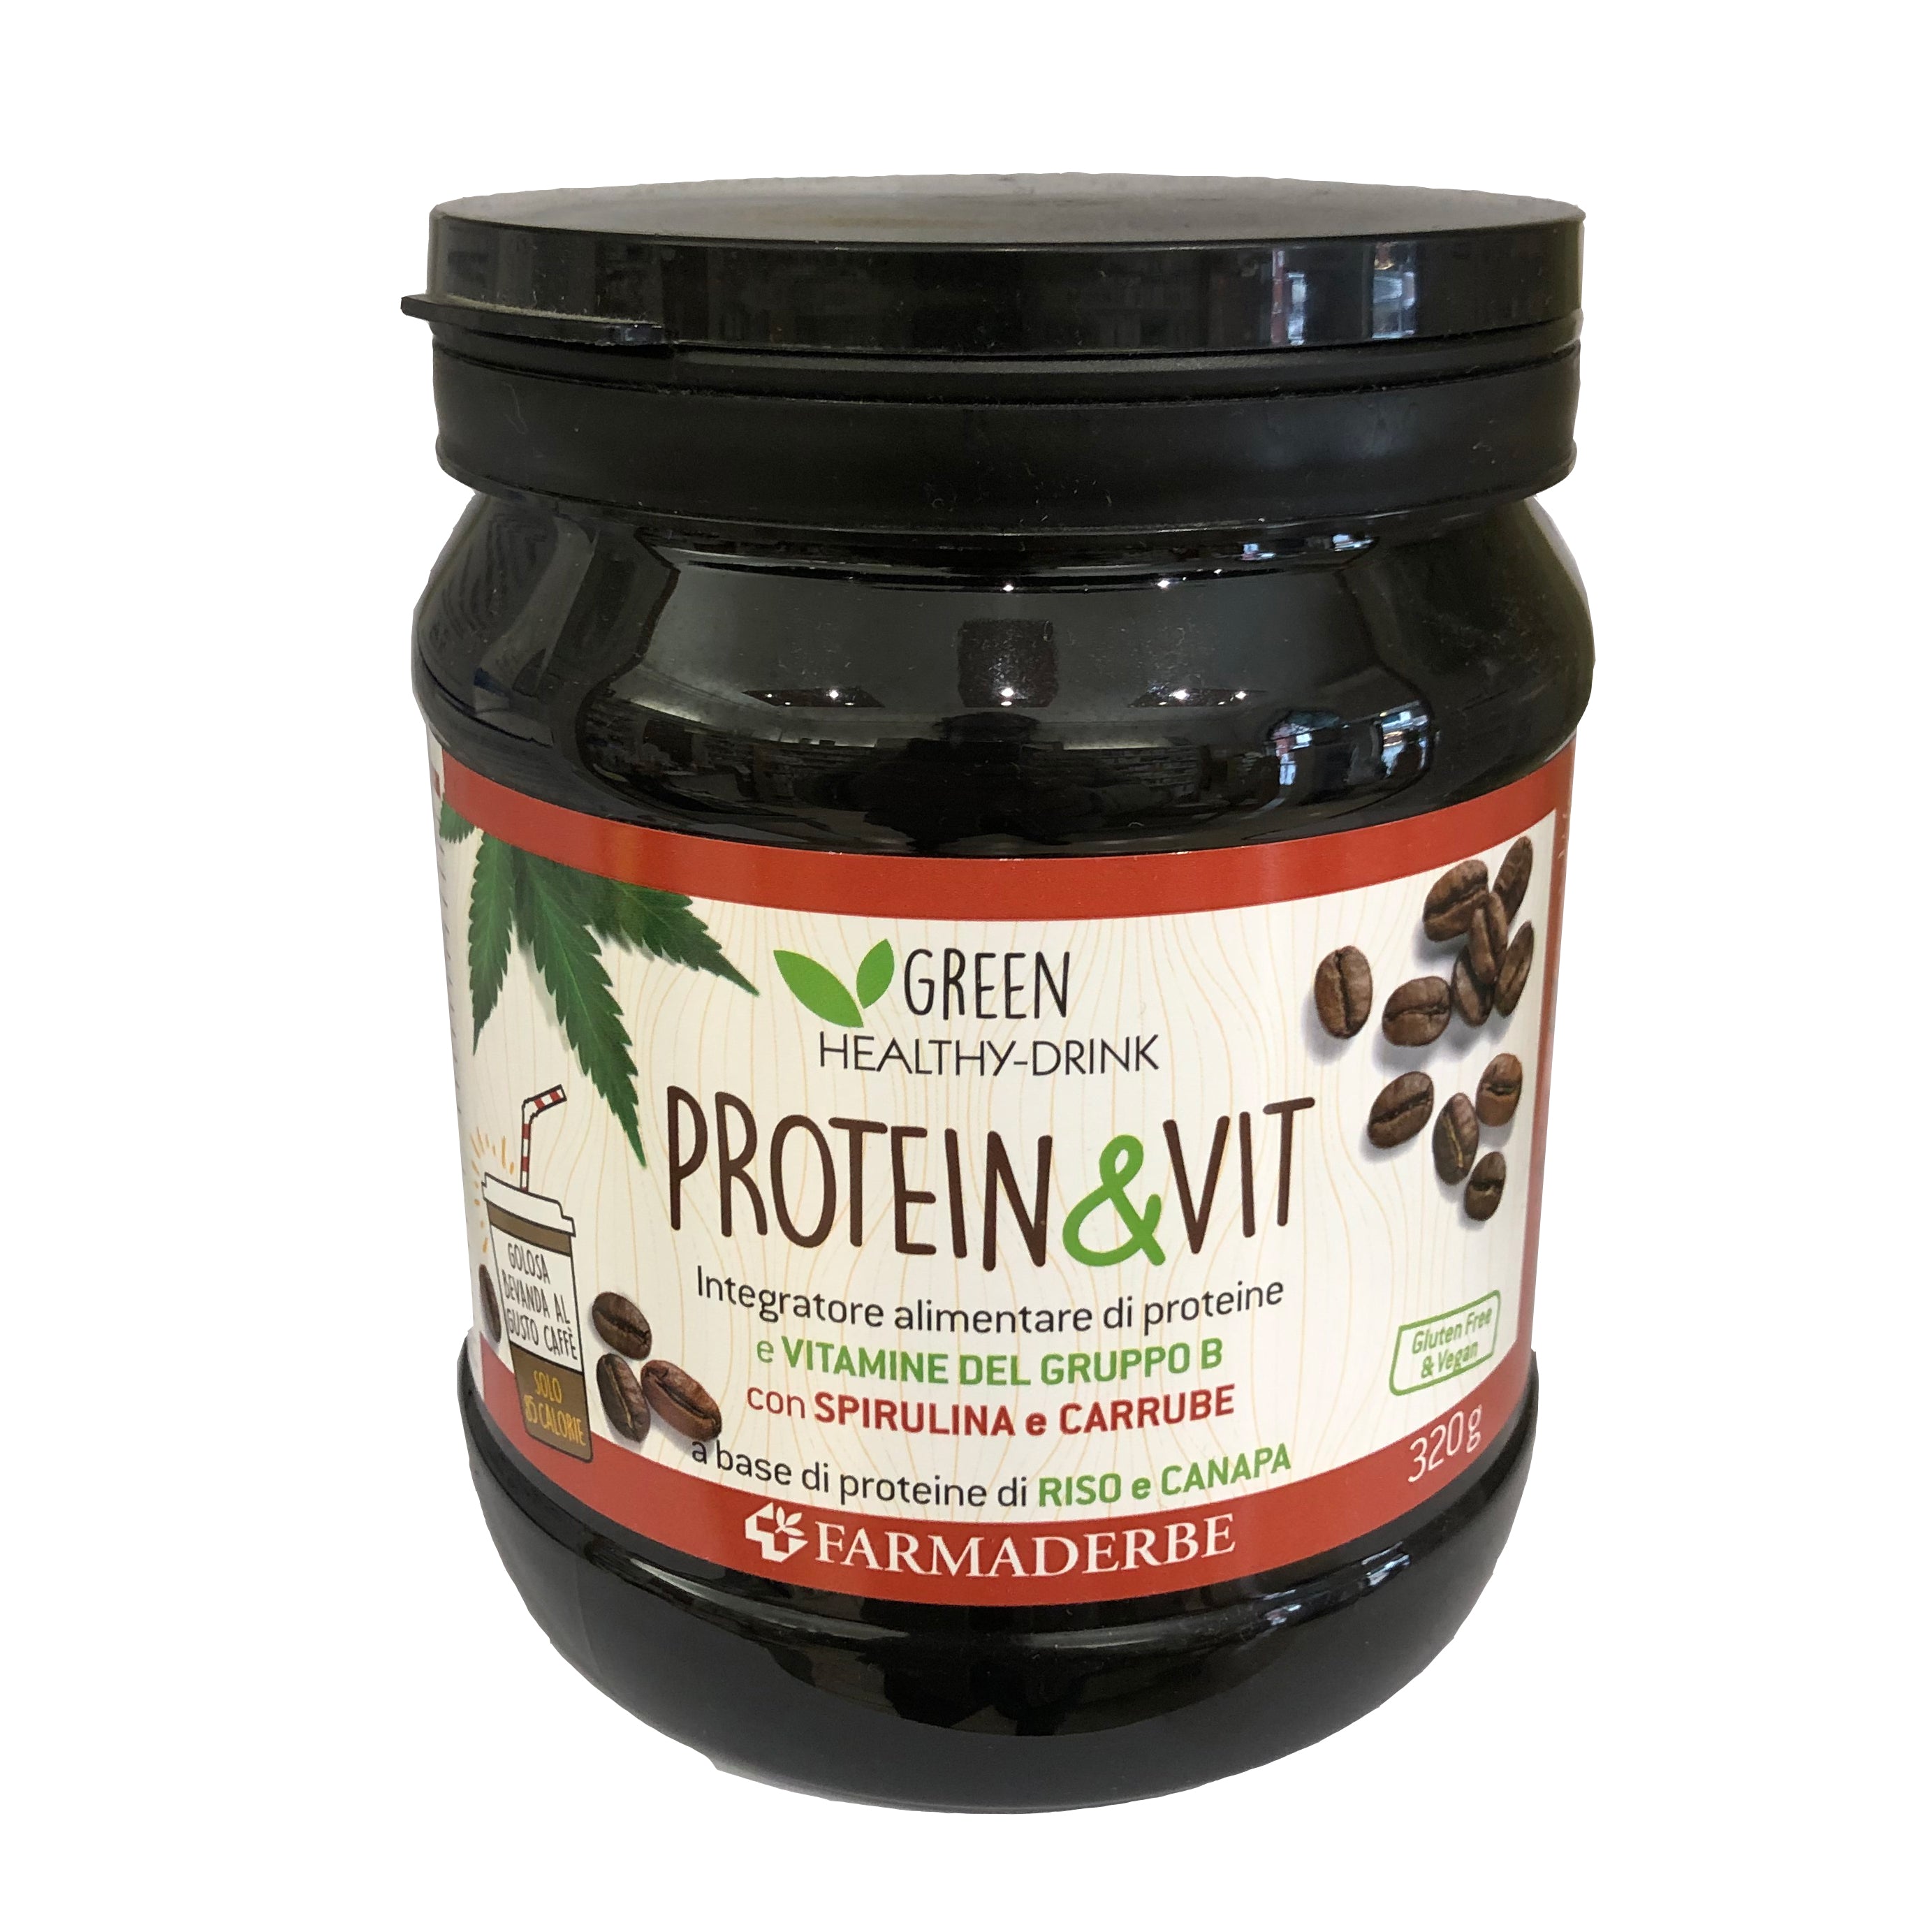 Integratori Alimentari Protein & Vit Farmaderbe - Erboristeria Armonie Naturali